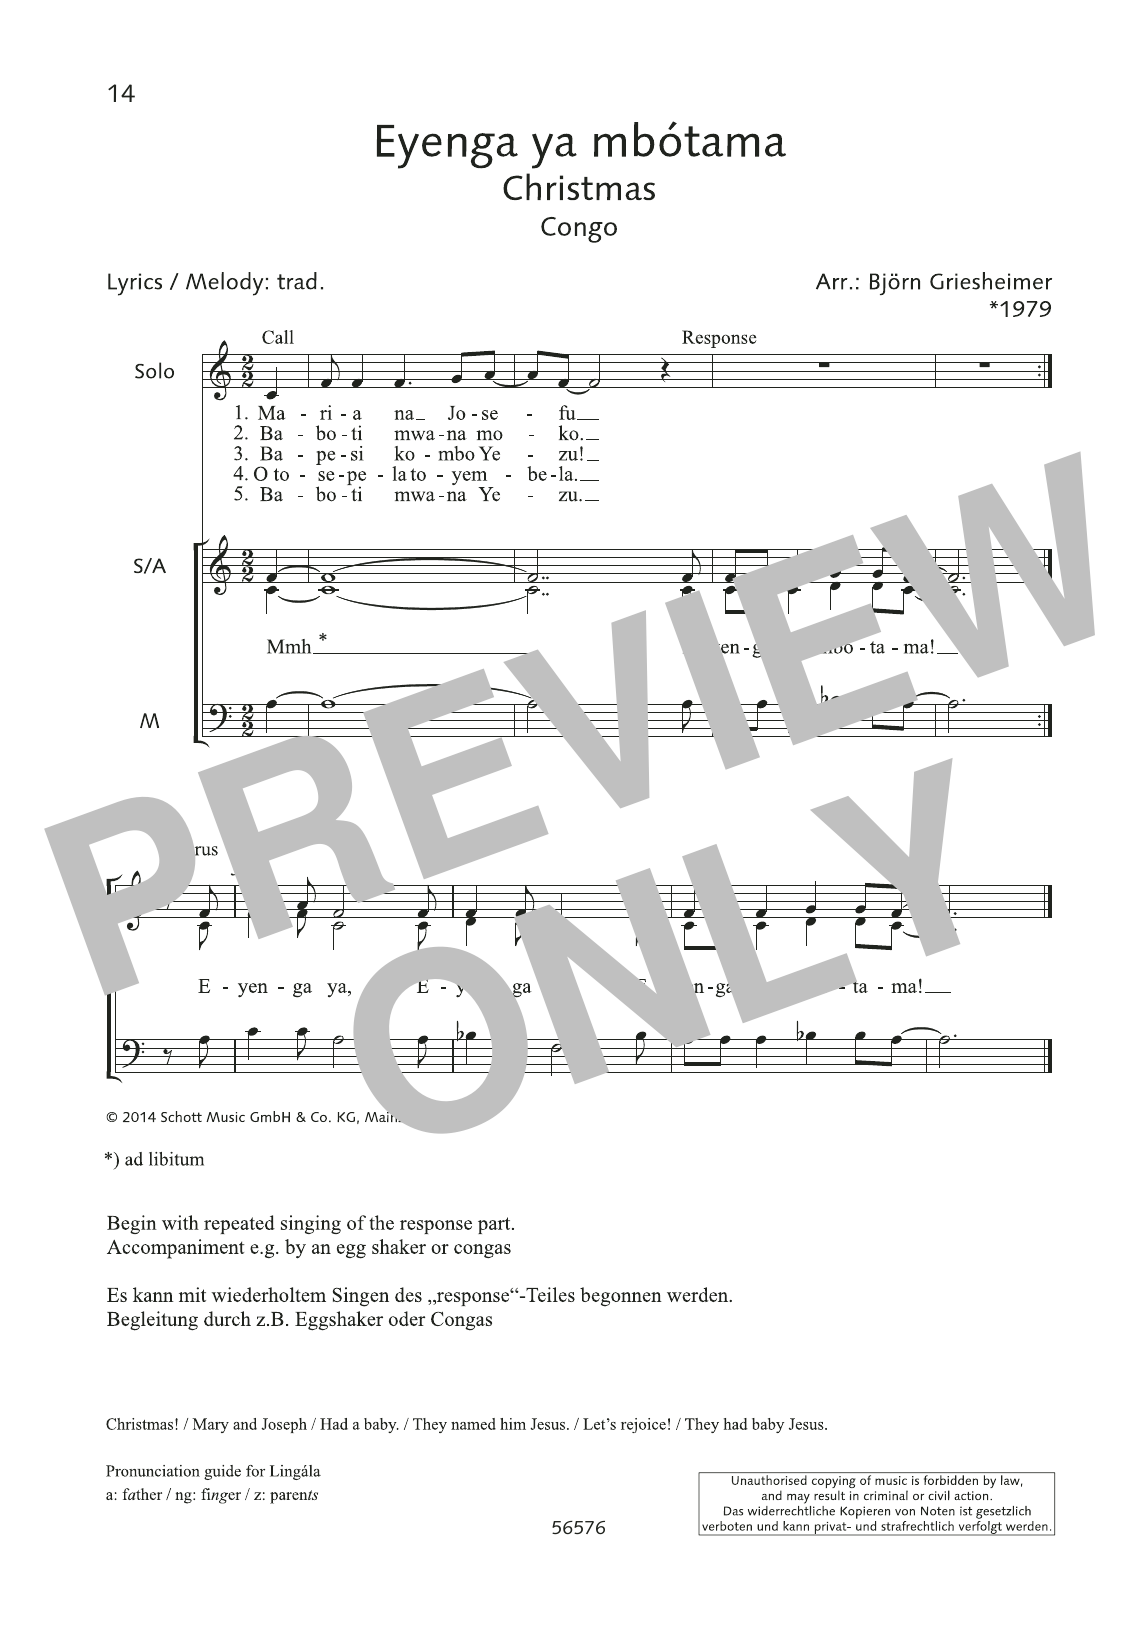 Download Björn Griesheimer Eyenga ya mbotama Sheet Music and learn how to play SAB Choir PDF digital score in minutes